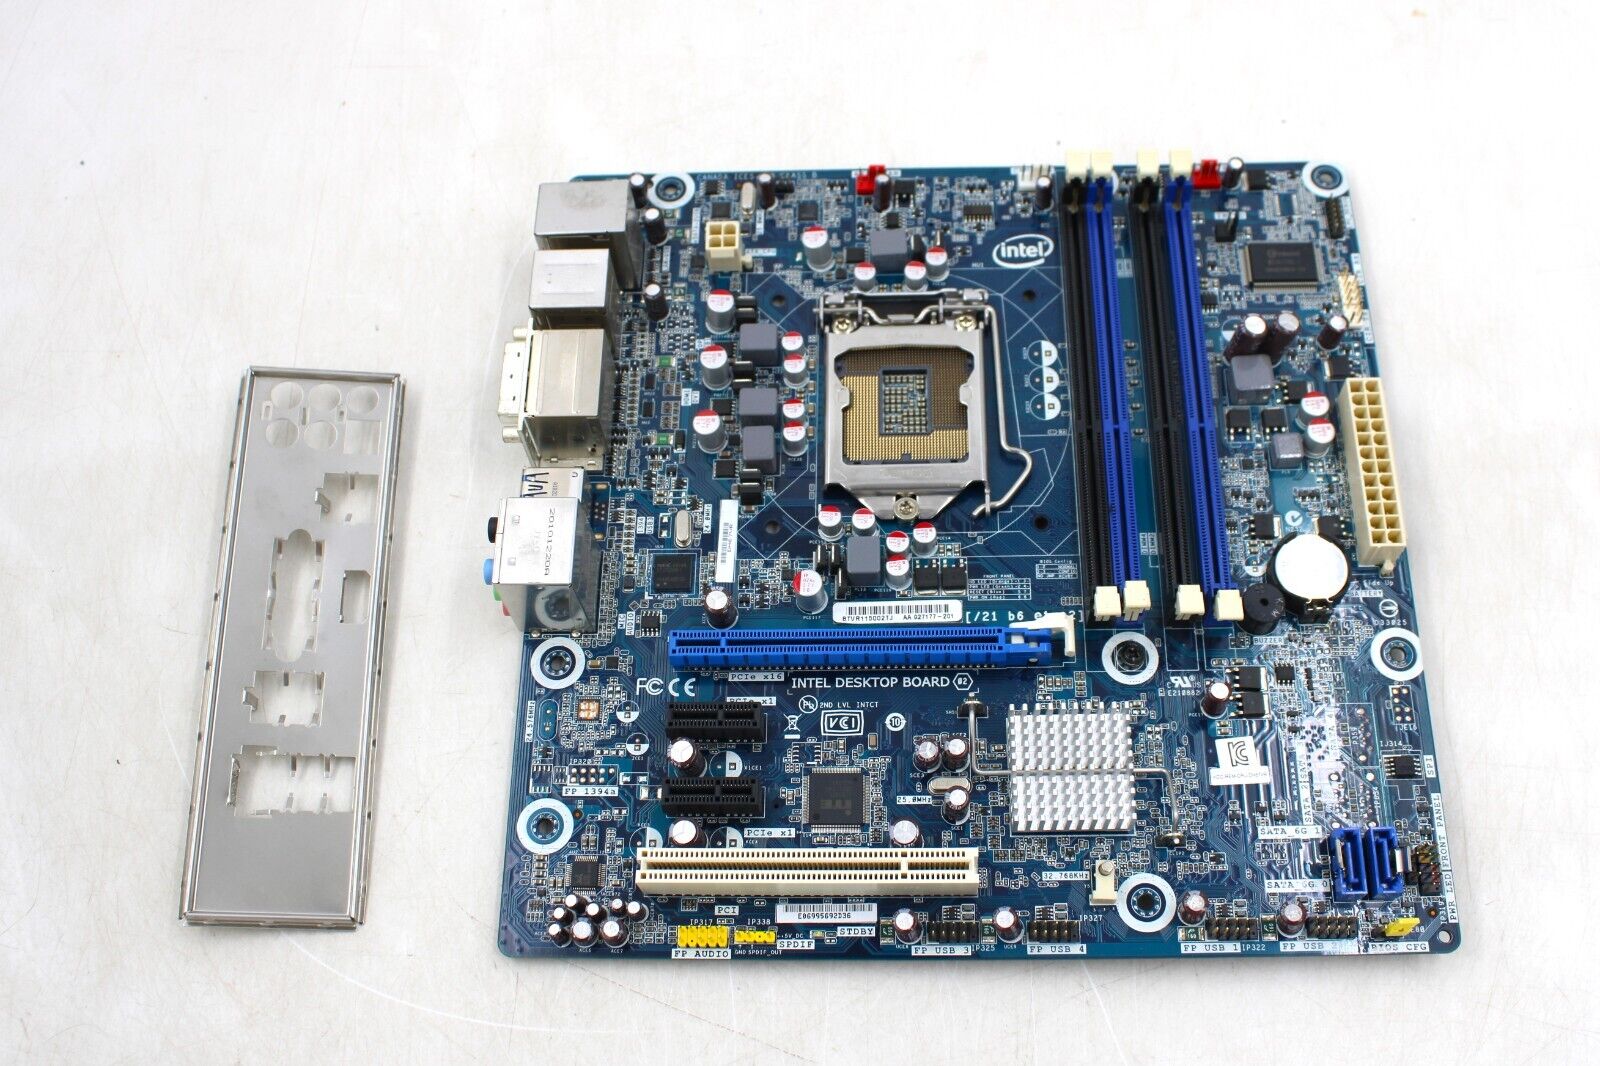 Intel DH67VR LGA 1155 MicroATX DDR3 USB 3.0 Desktop Motherboard With I/O Shield 